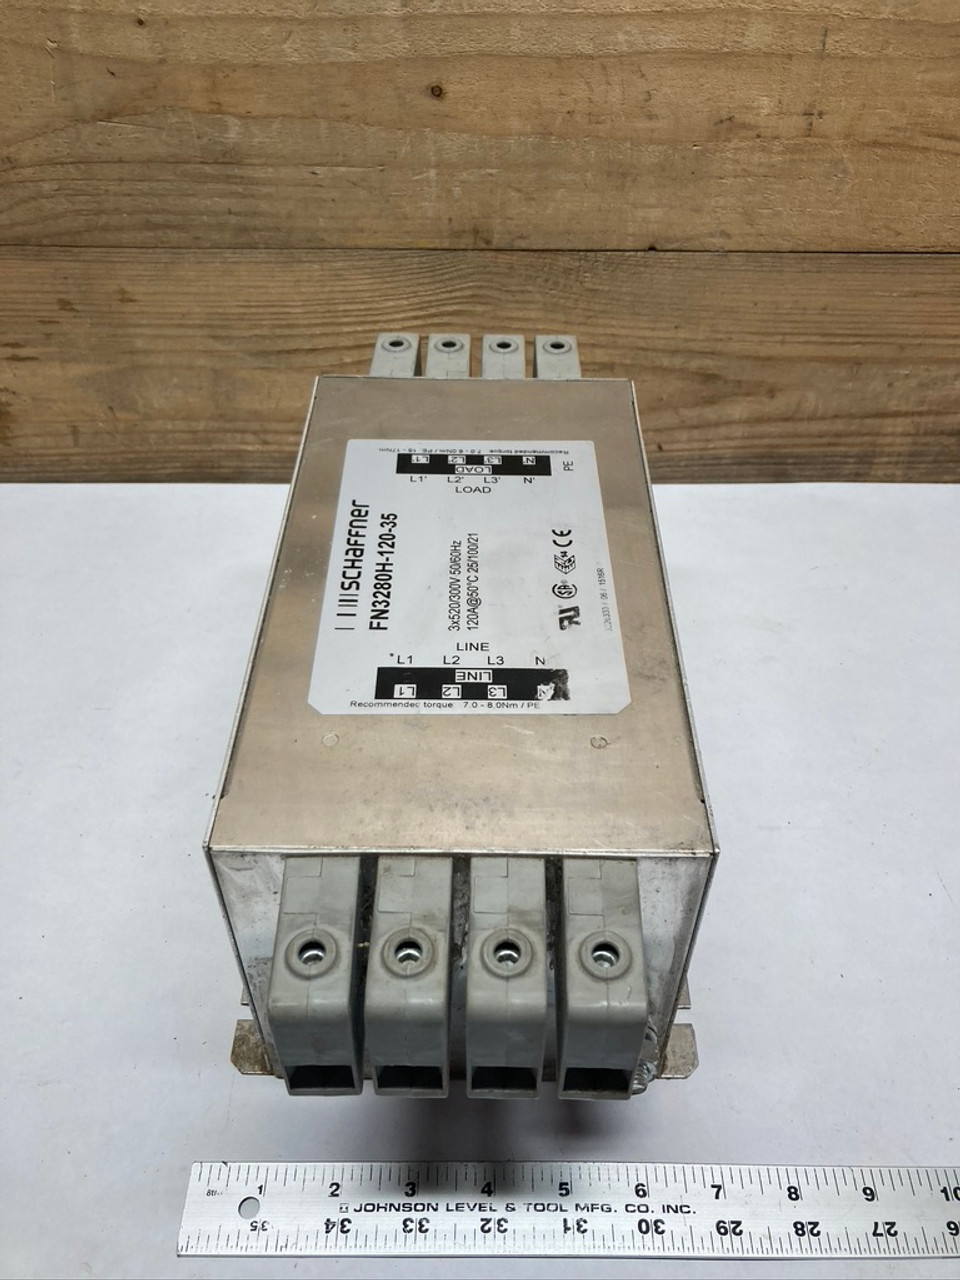 Direct Current Power Filter FN3280H-120-35 Schaffner